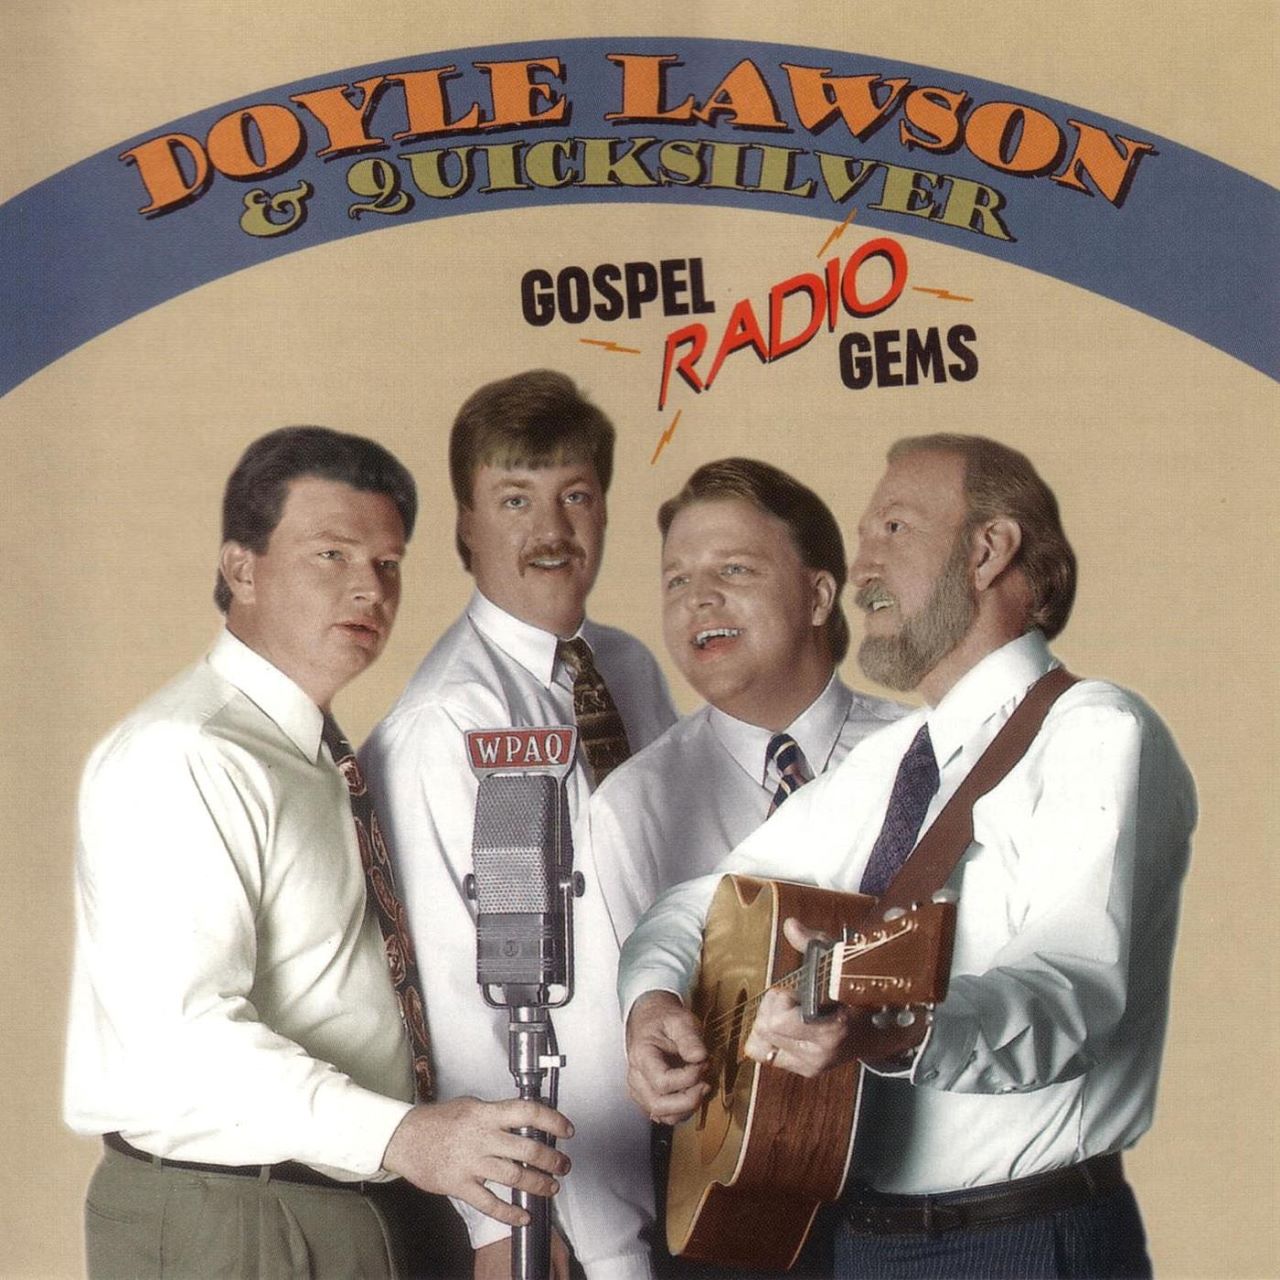 Doyle Lawson & Quicksilver - Gospel Radio Gems cover album